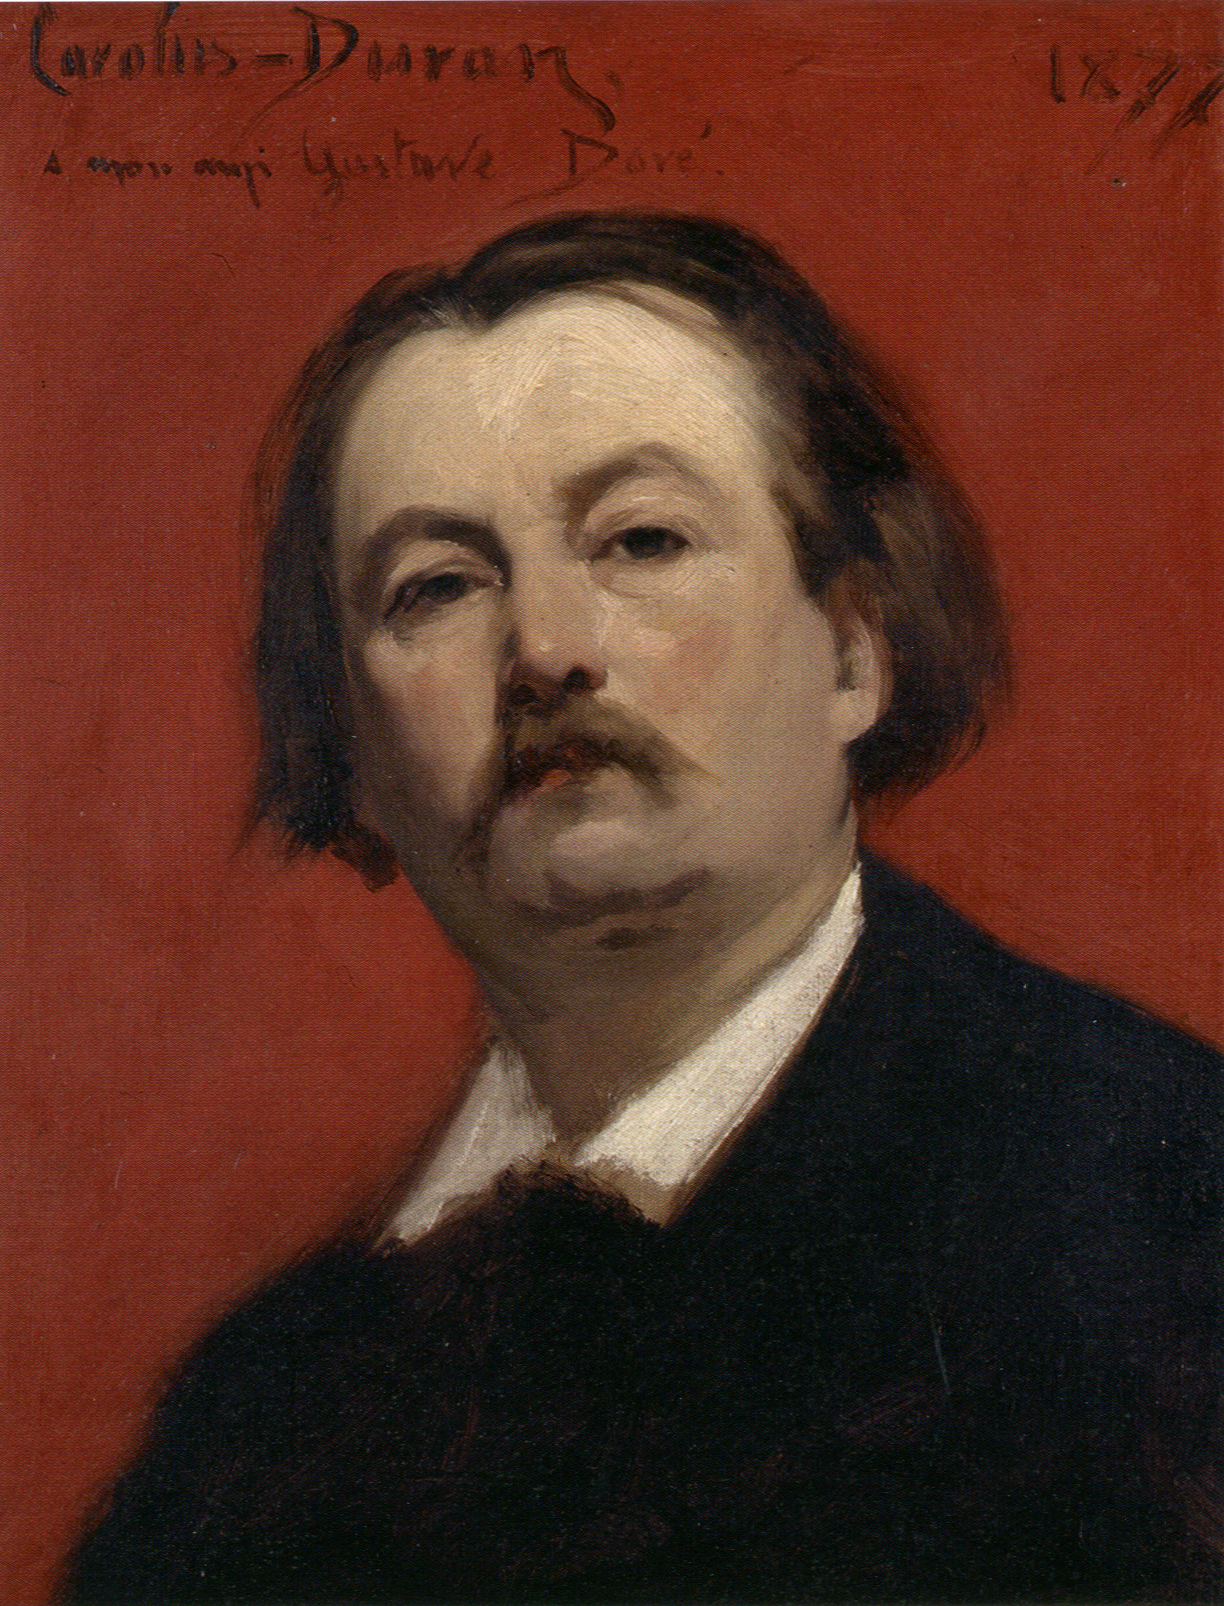 Gustave Doré - 6 januari1832 - 23 januari1883